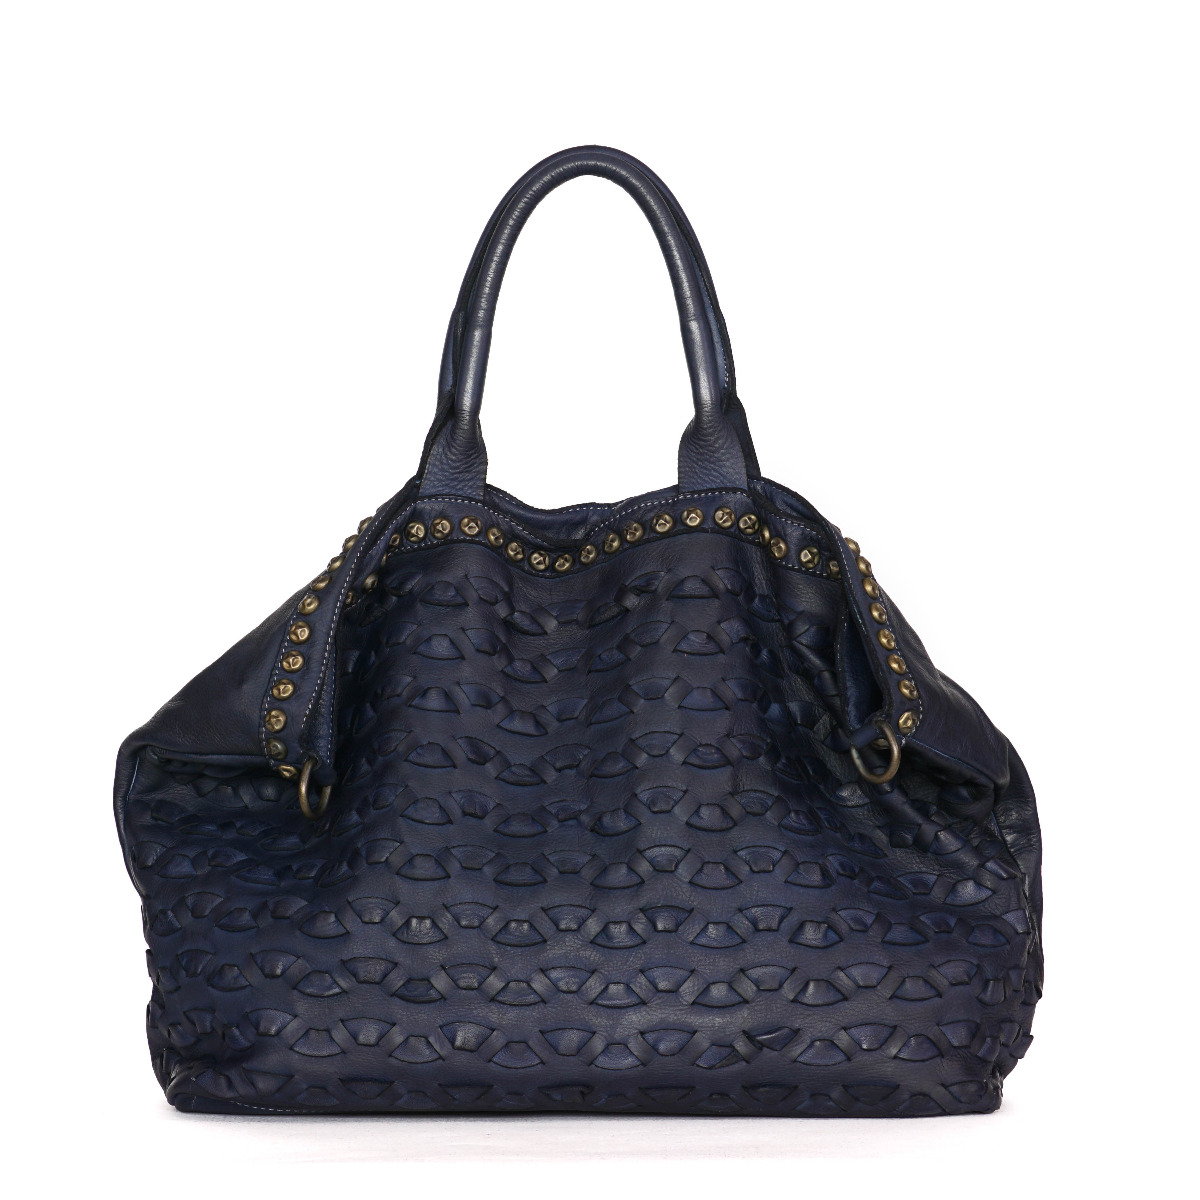 Dark blue woven leather handmade bag